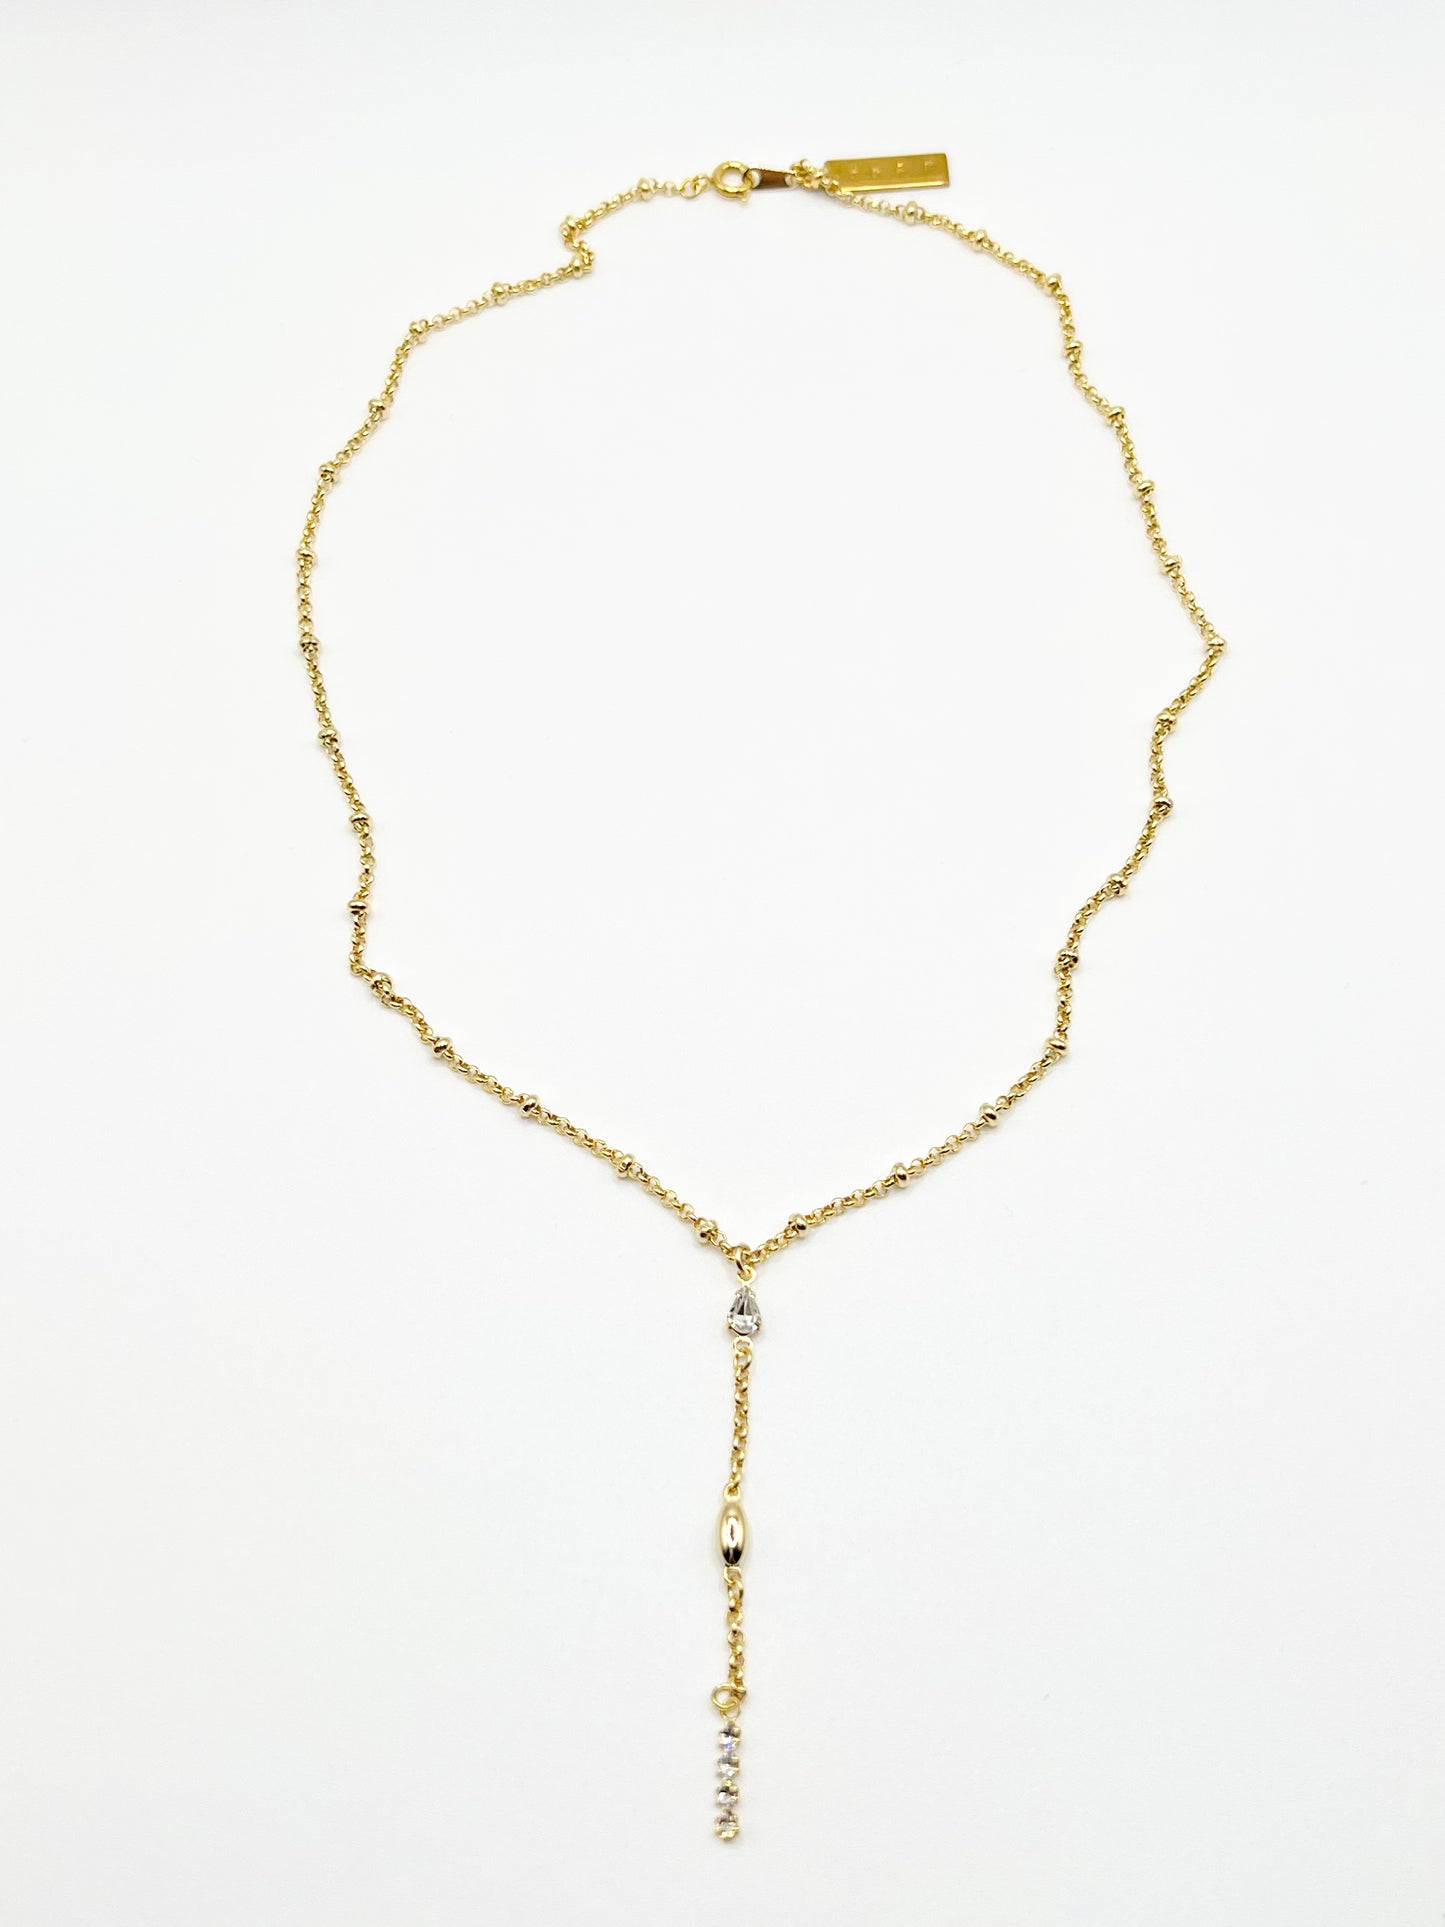 NW bijou motif necklace - Gold